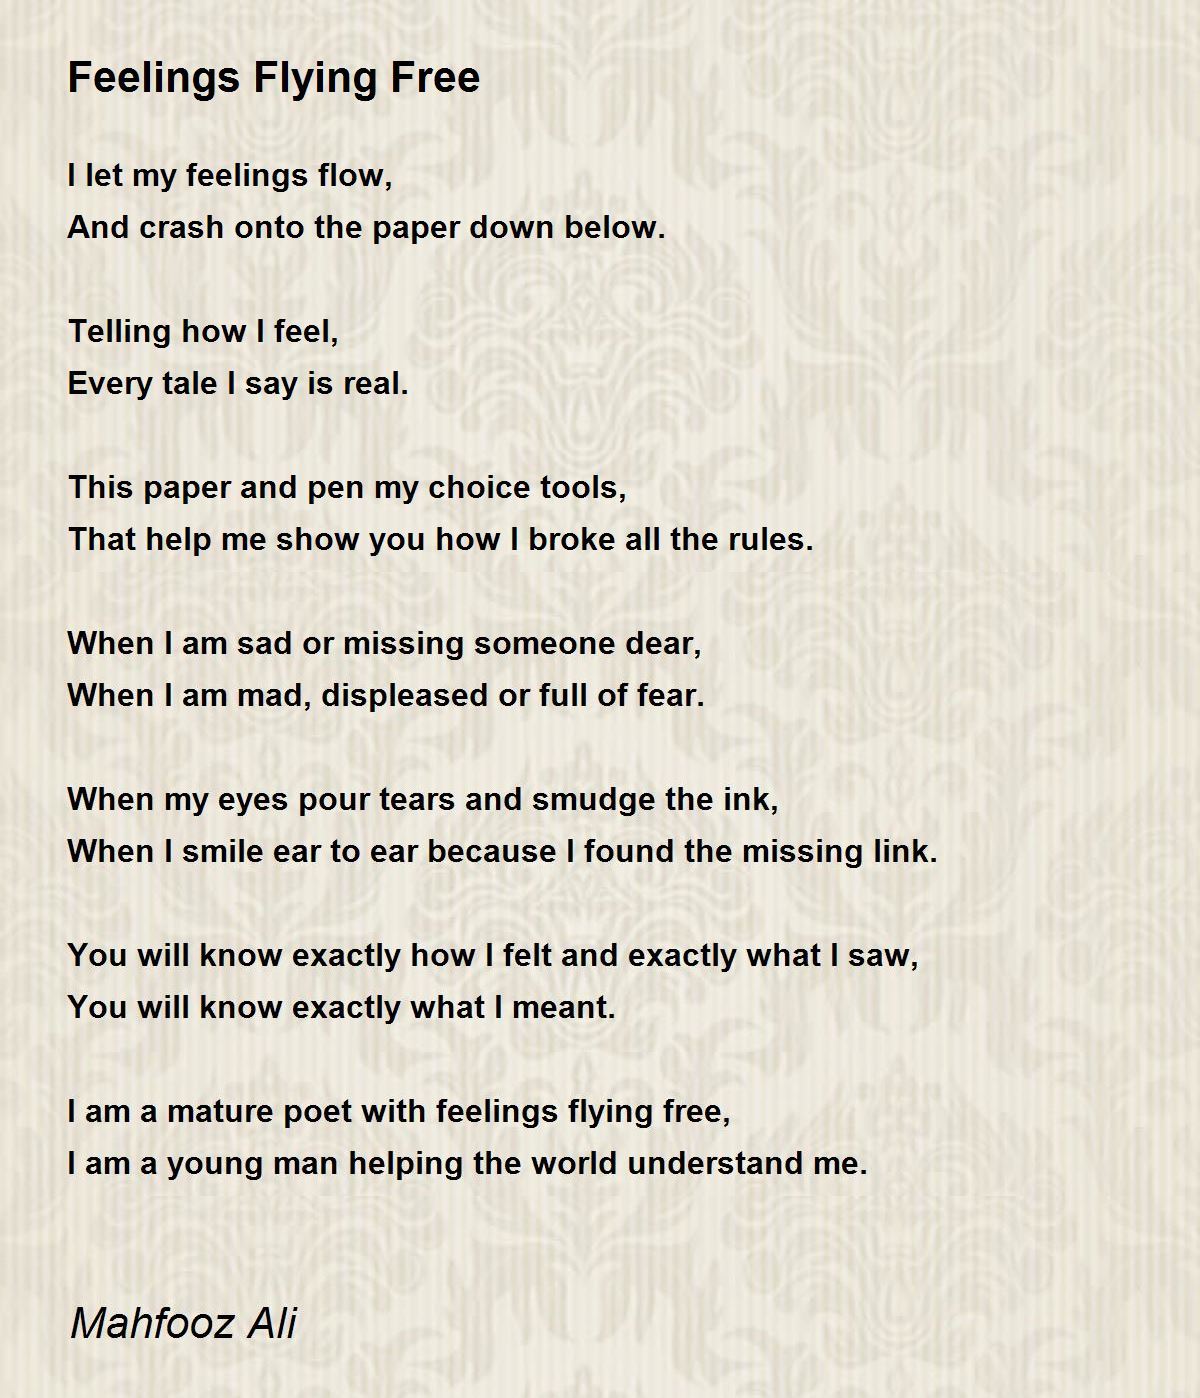 Feelings Flying Free - Feelings Flying Free Poem by Mahfooz Ali